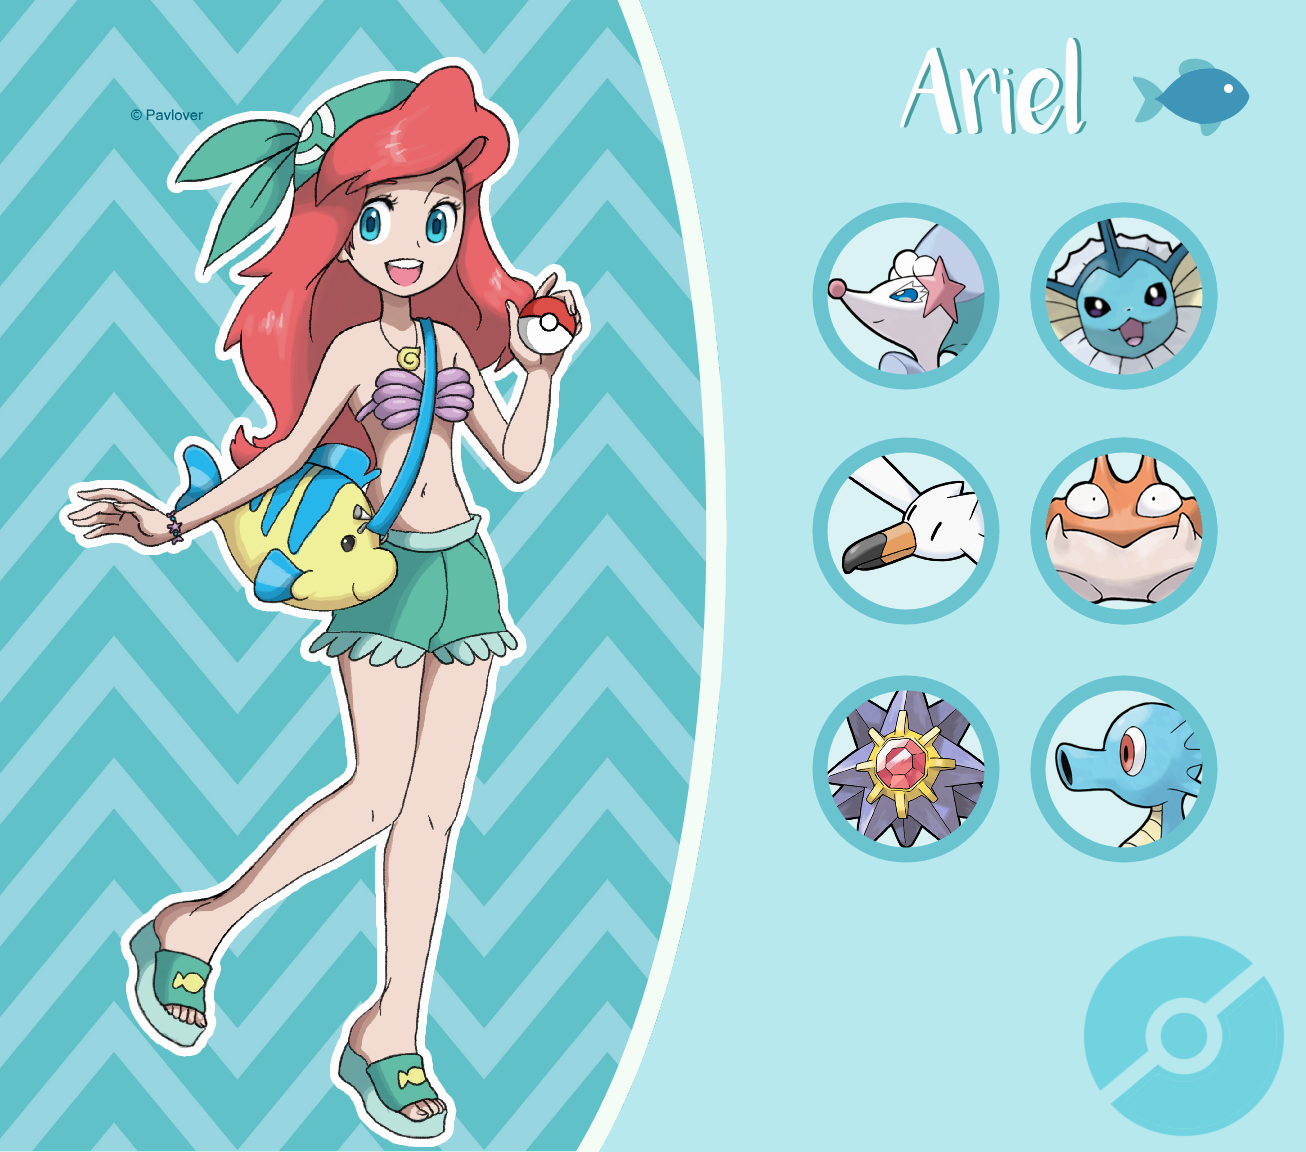 Disney Pokemon trainer : Ariel by Pavlover